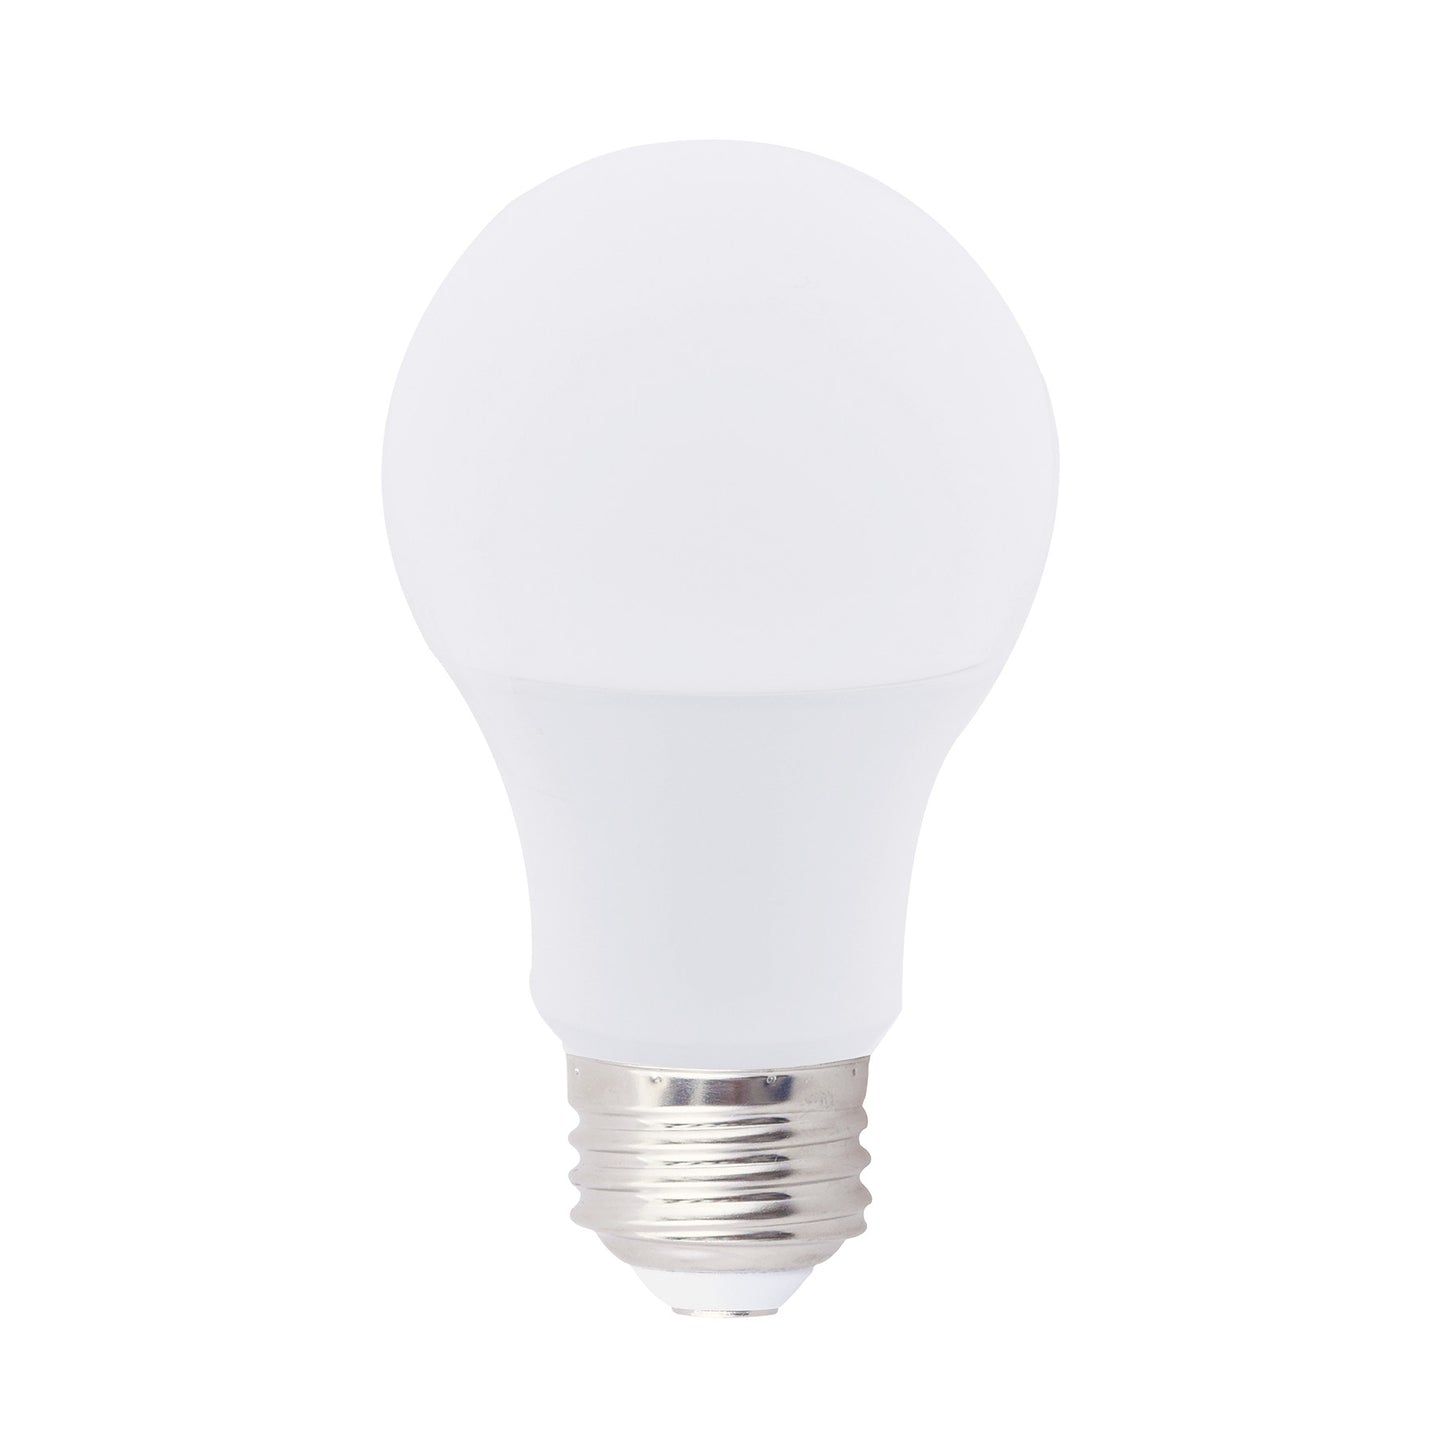 Luxrite LR21430 A19 LED Bulb 75W Equivalent, 1100 Lumens, 2700K Soft White, Dimmable Standard LED Light Bulb